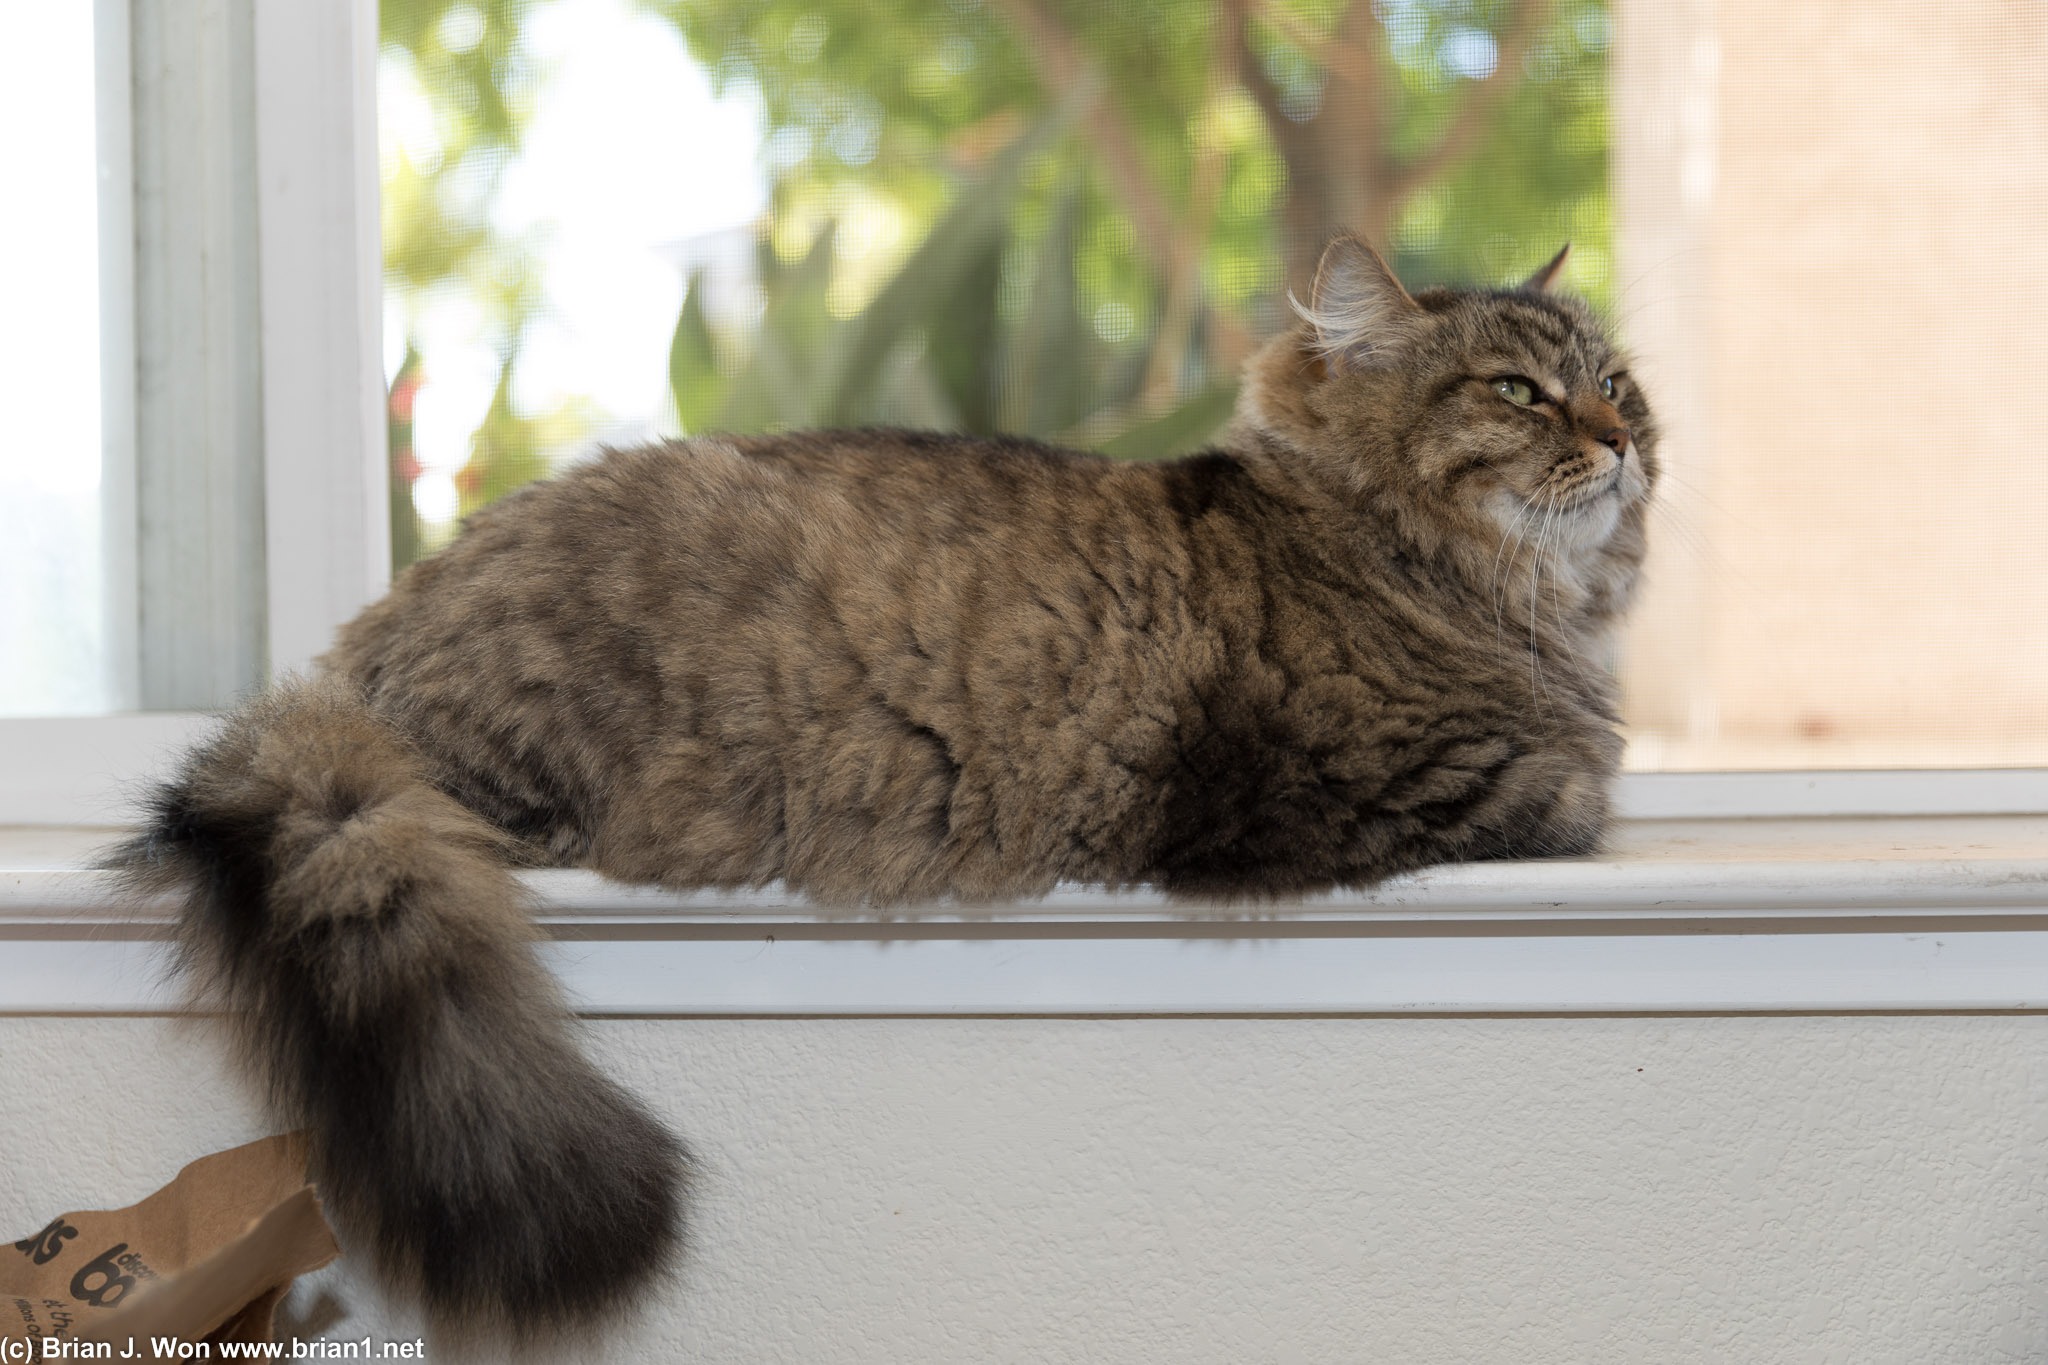 Cat + windowsill = classic pose.